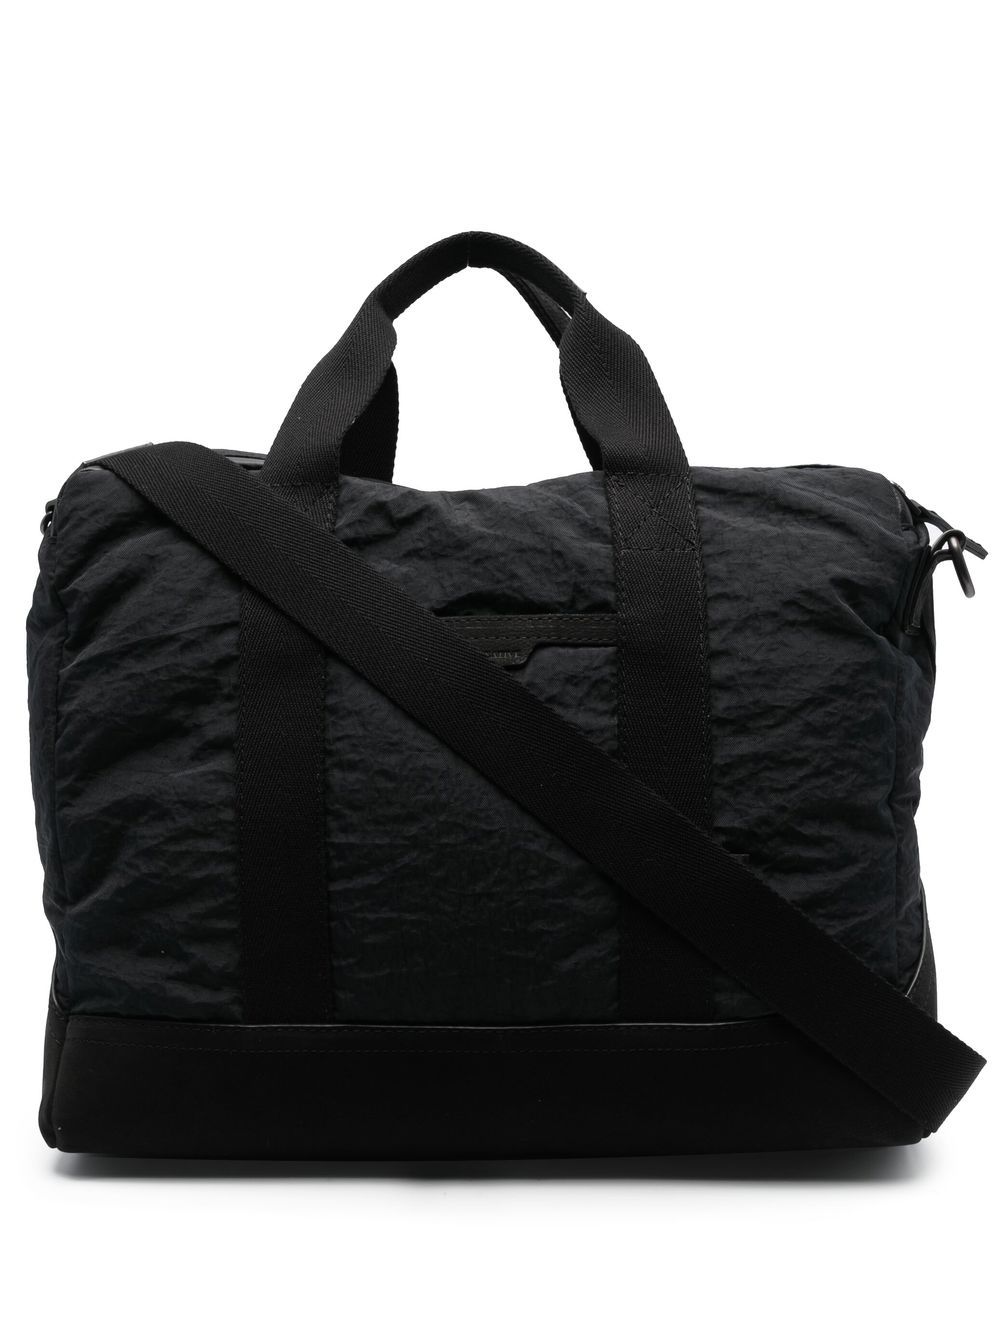 Officine Creative Pilot 002 duffle bag - Black von Officine Creative